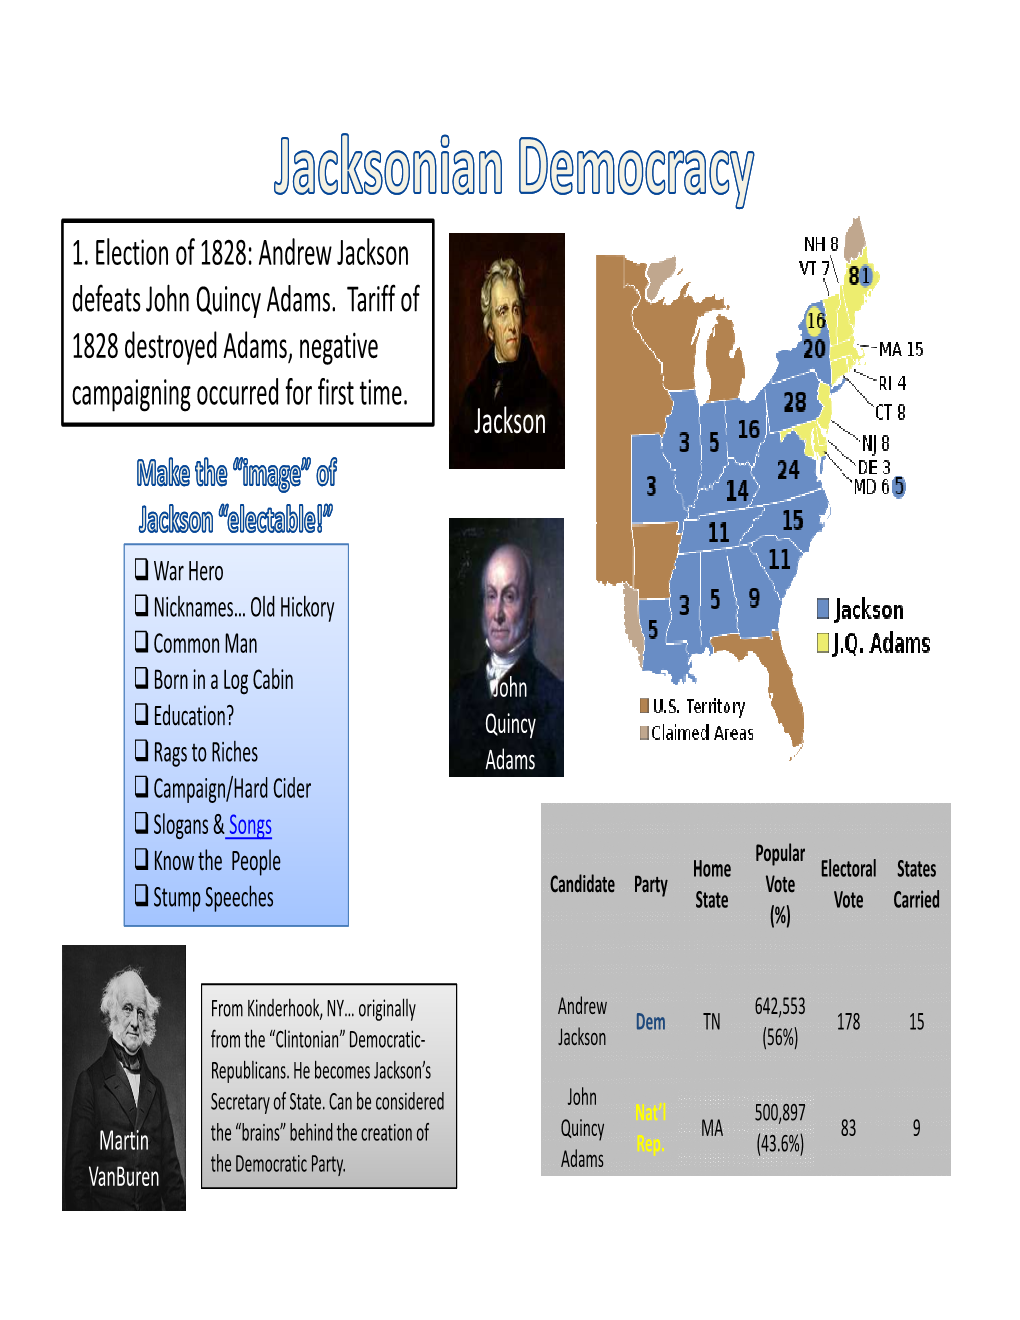 Jackson 1. Election of 1828: Andrew Jackson Defeats John Quincy Adams. Tariff of 1828 Destroyed Adams, Negative Campaigning